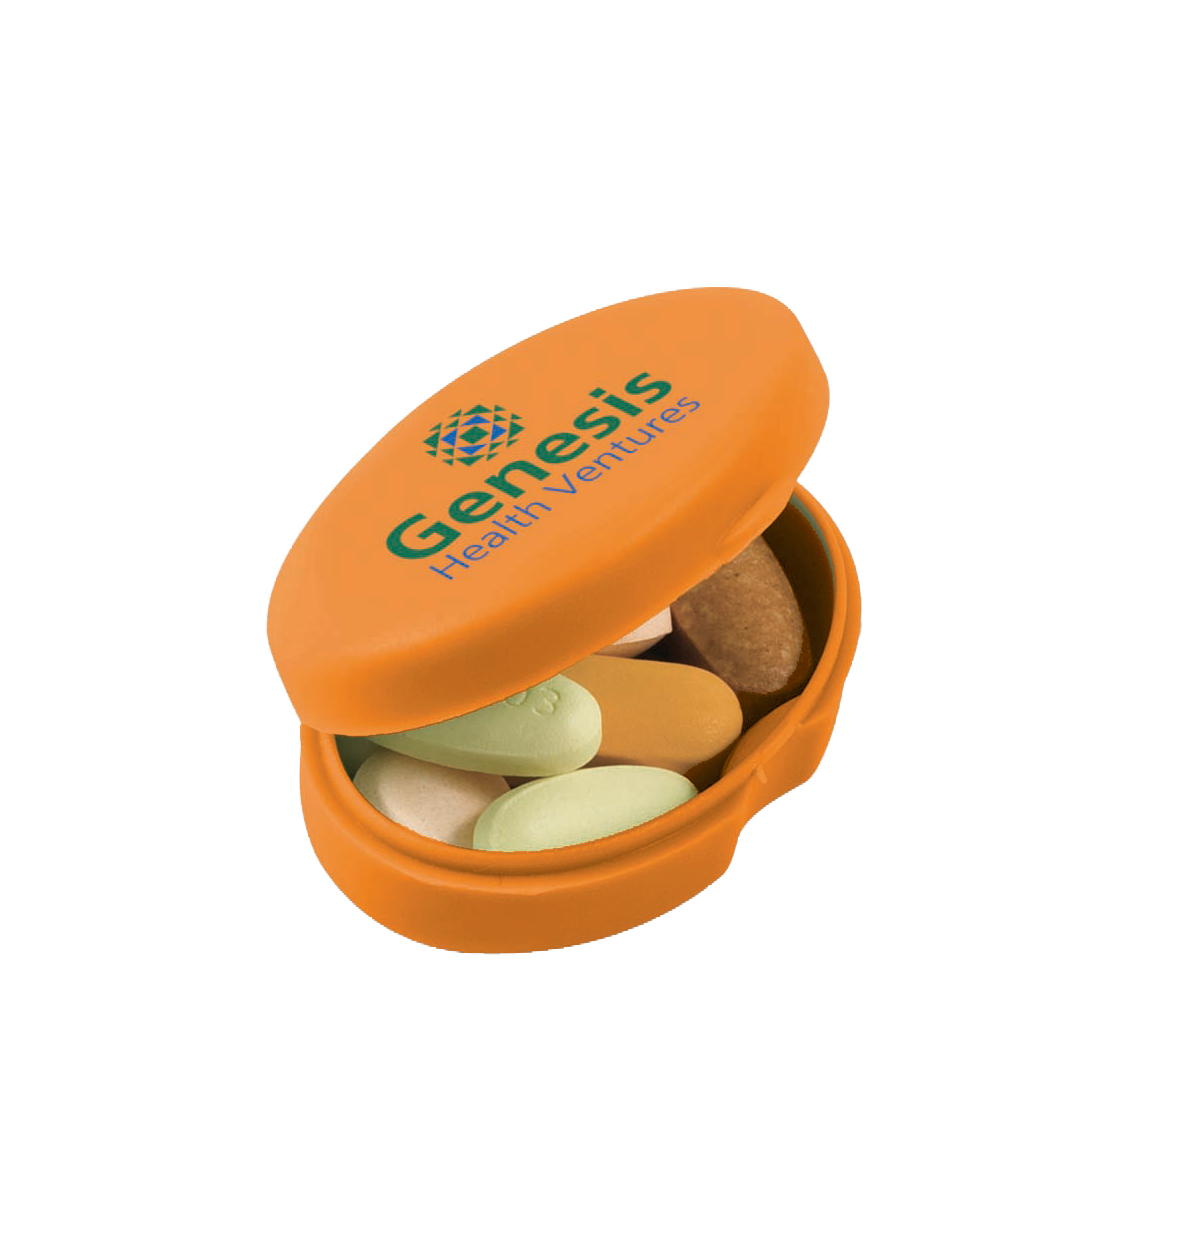 Oval Pill Box